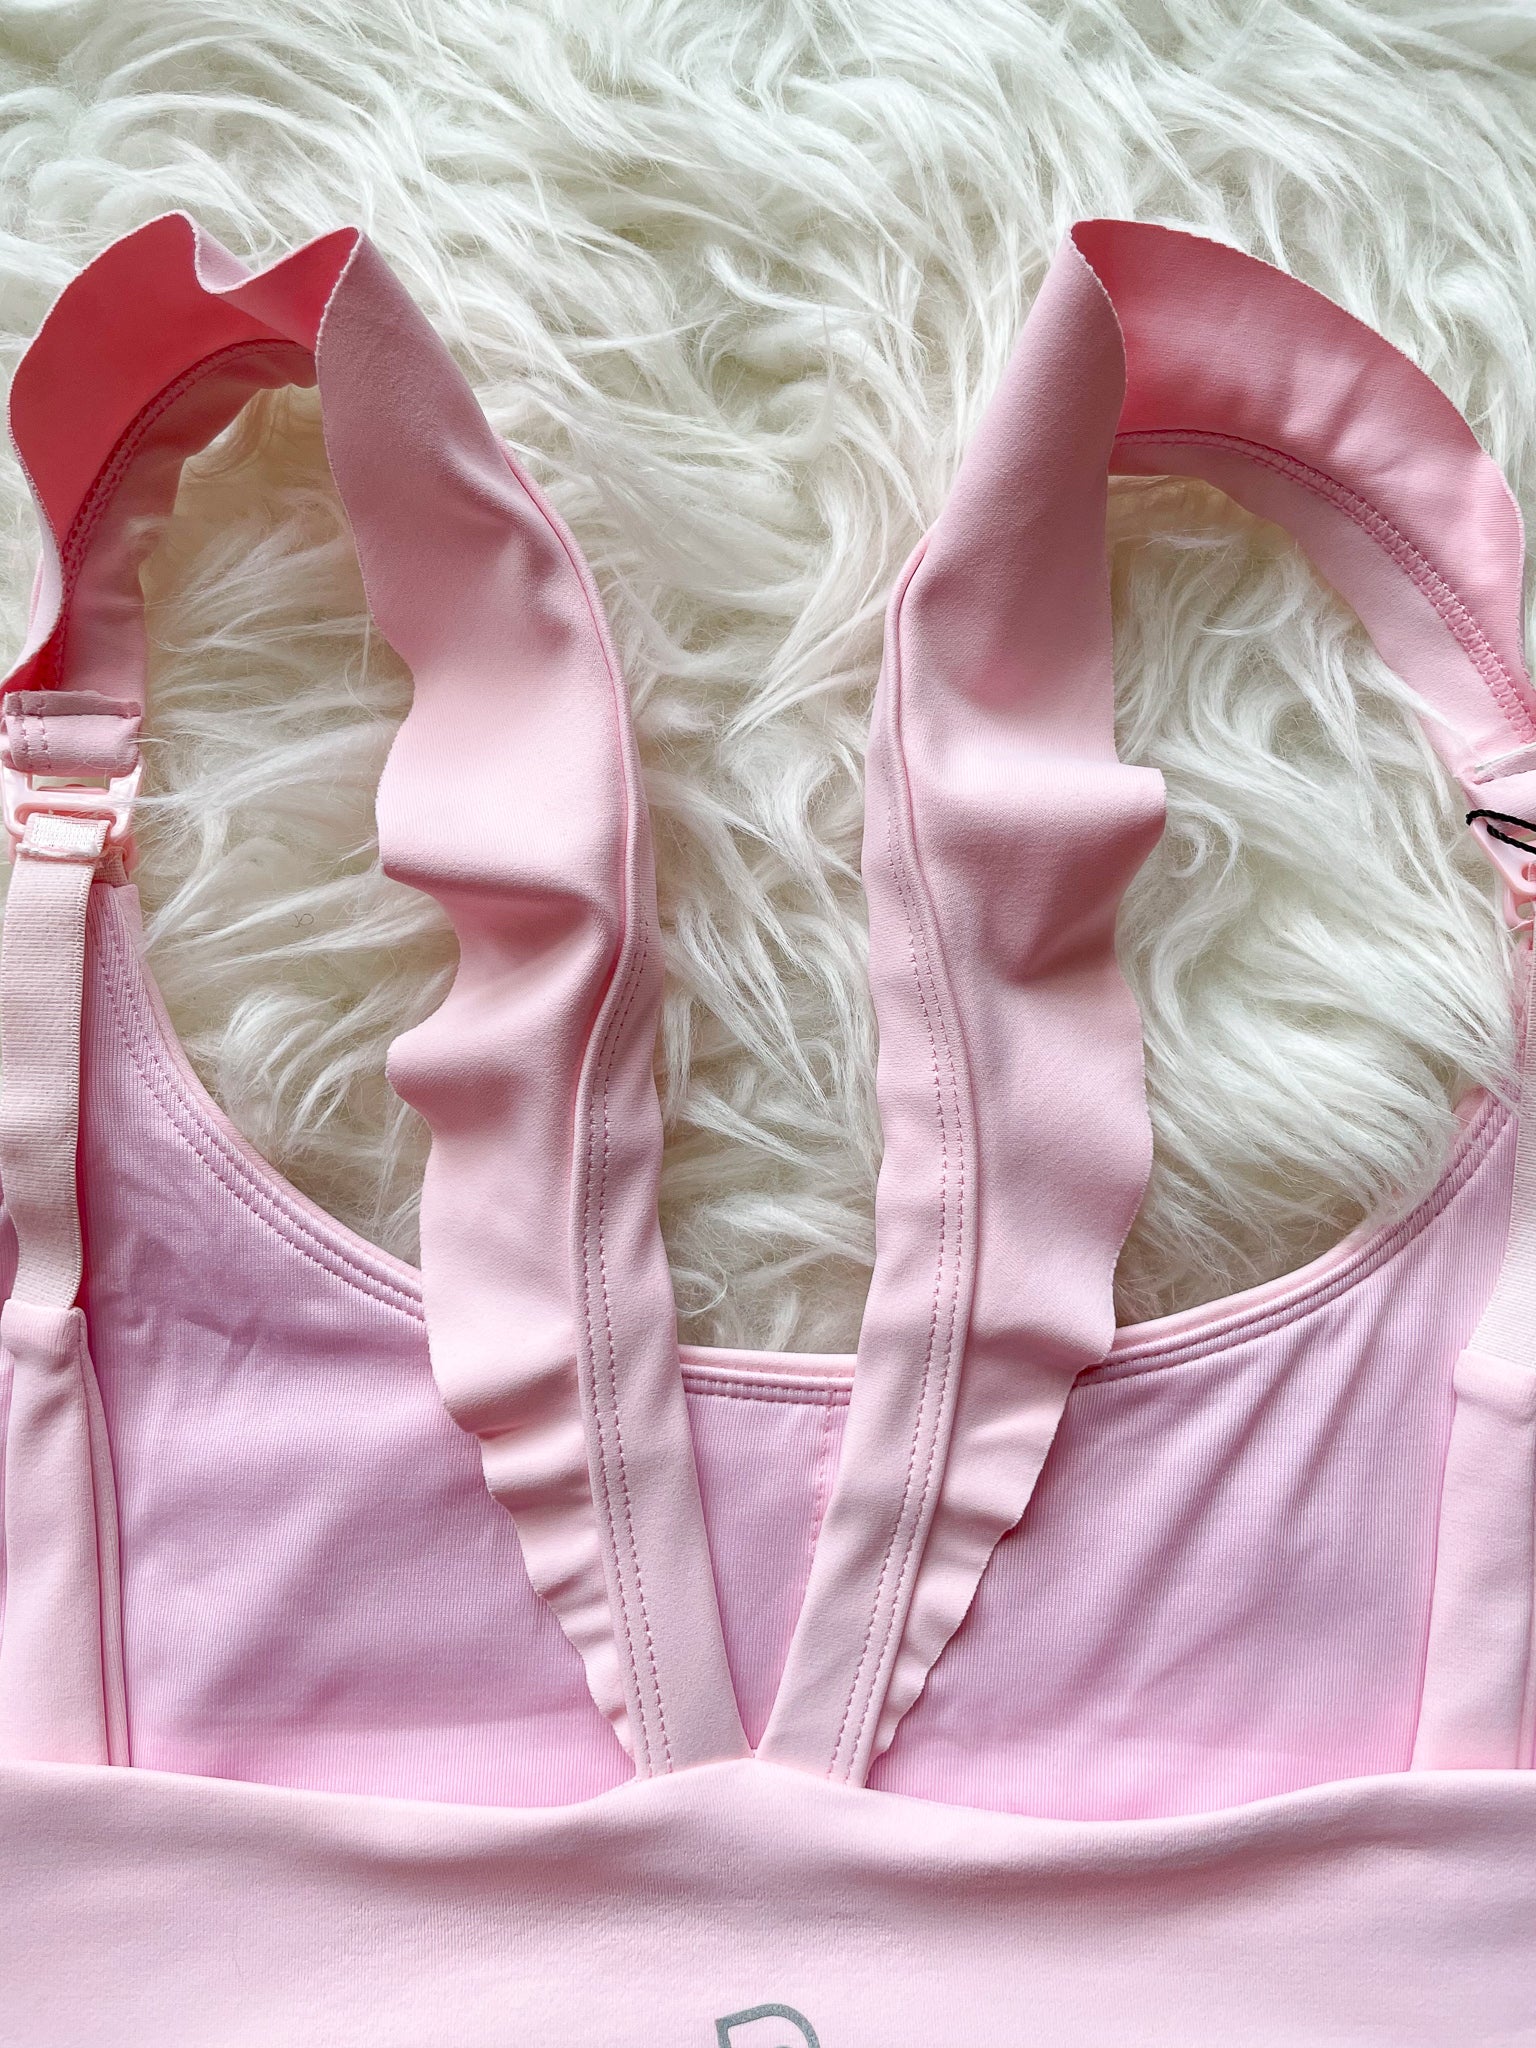 Soma Blush Pink Nursing Bra Size Medium - $30 - From Helen